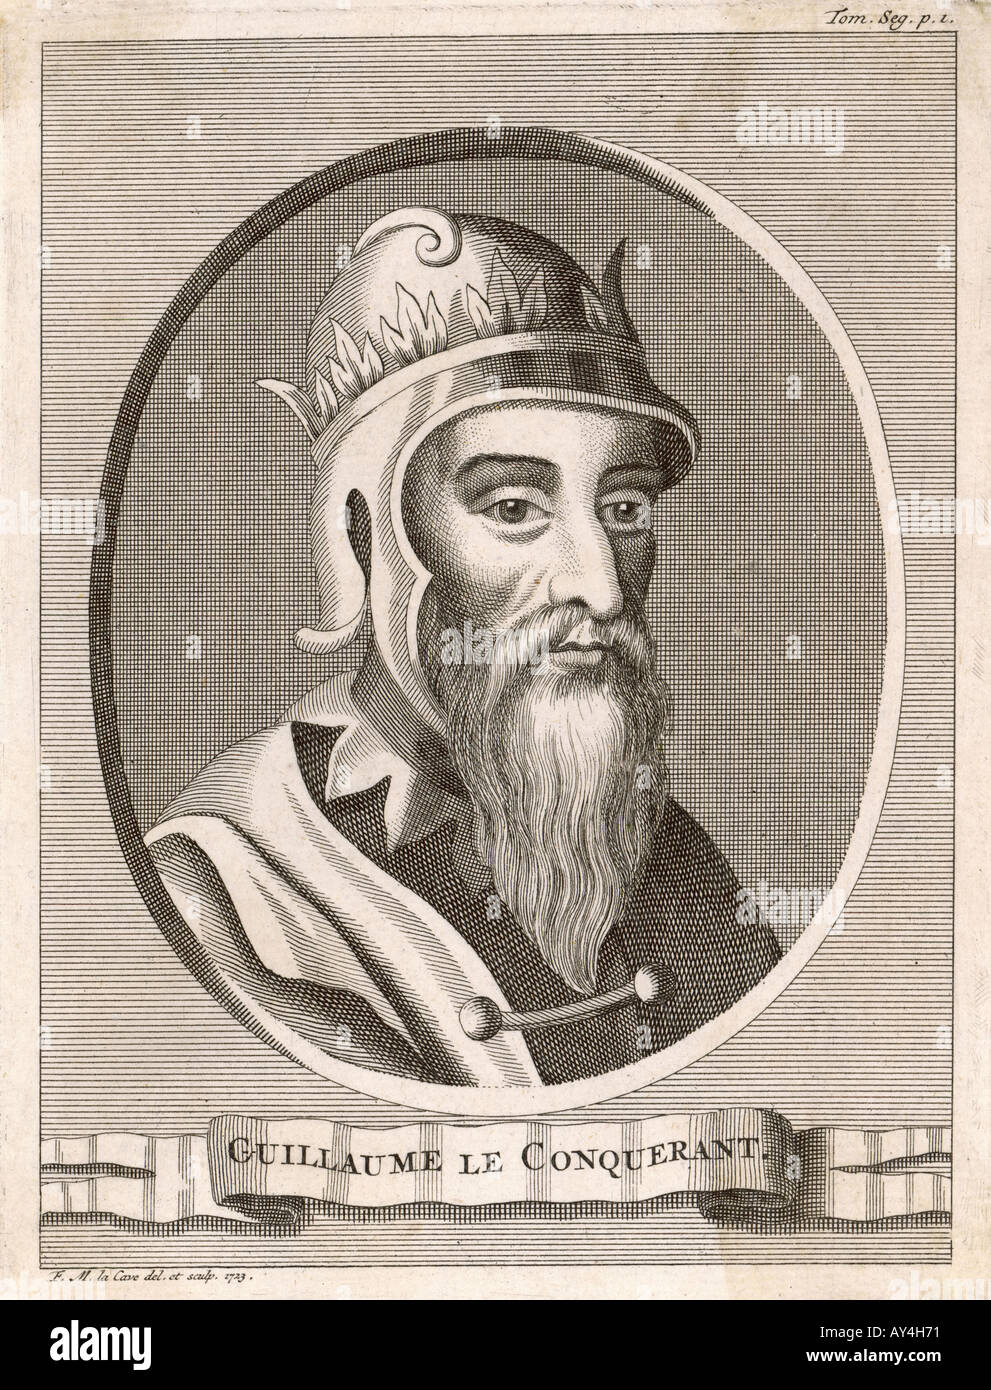 William I Le Conquérant Banque D'Images